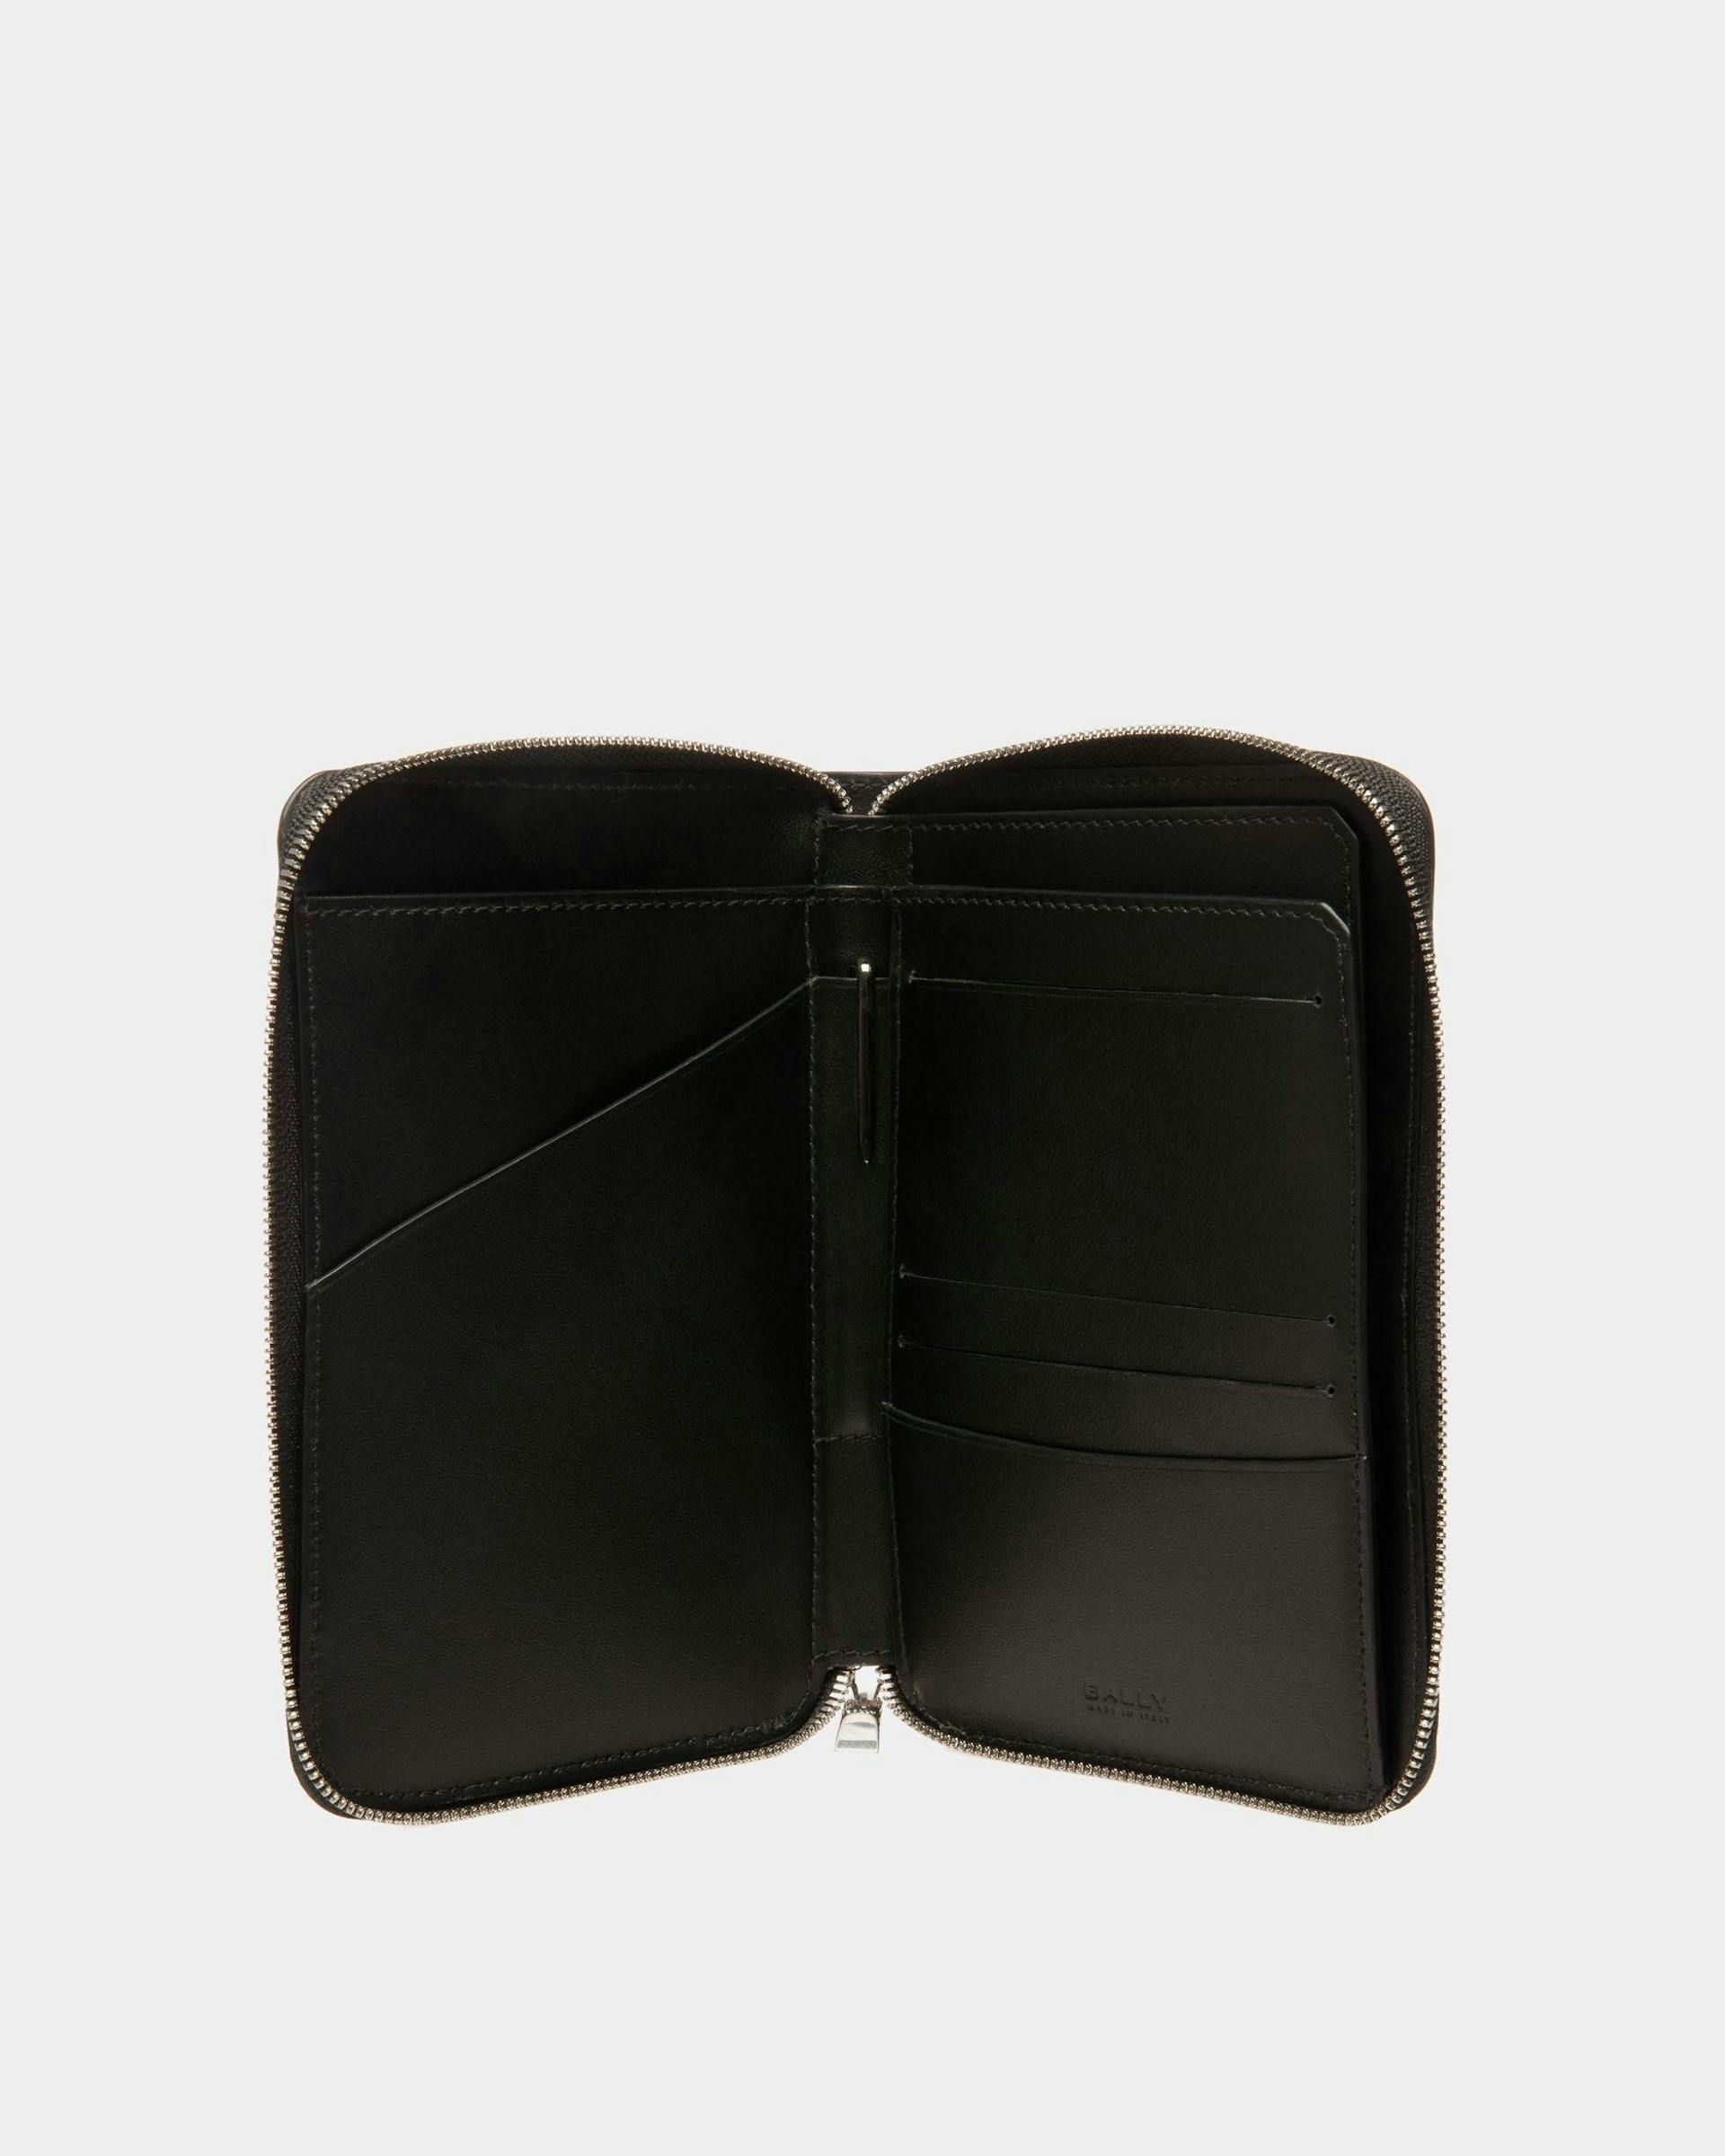 Men's Banque Travel Wallet In Black Leather | Bally | Still Life Open / Inside